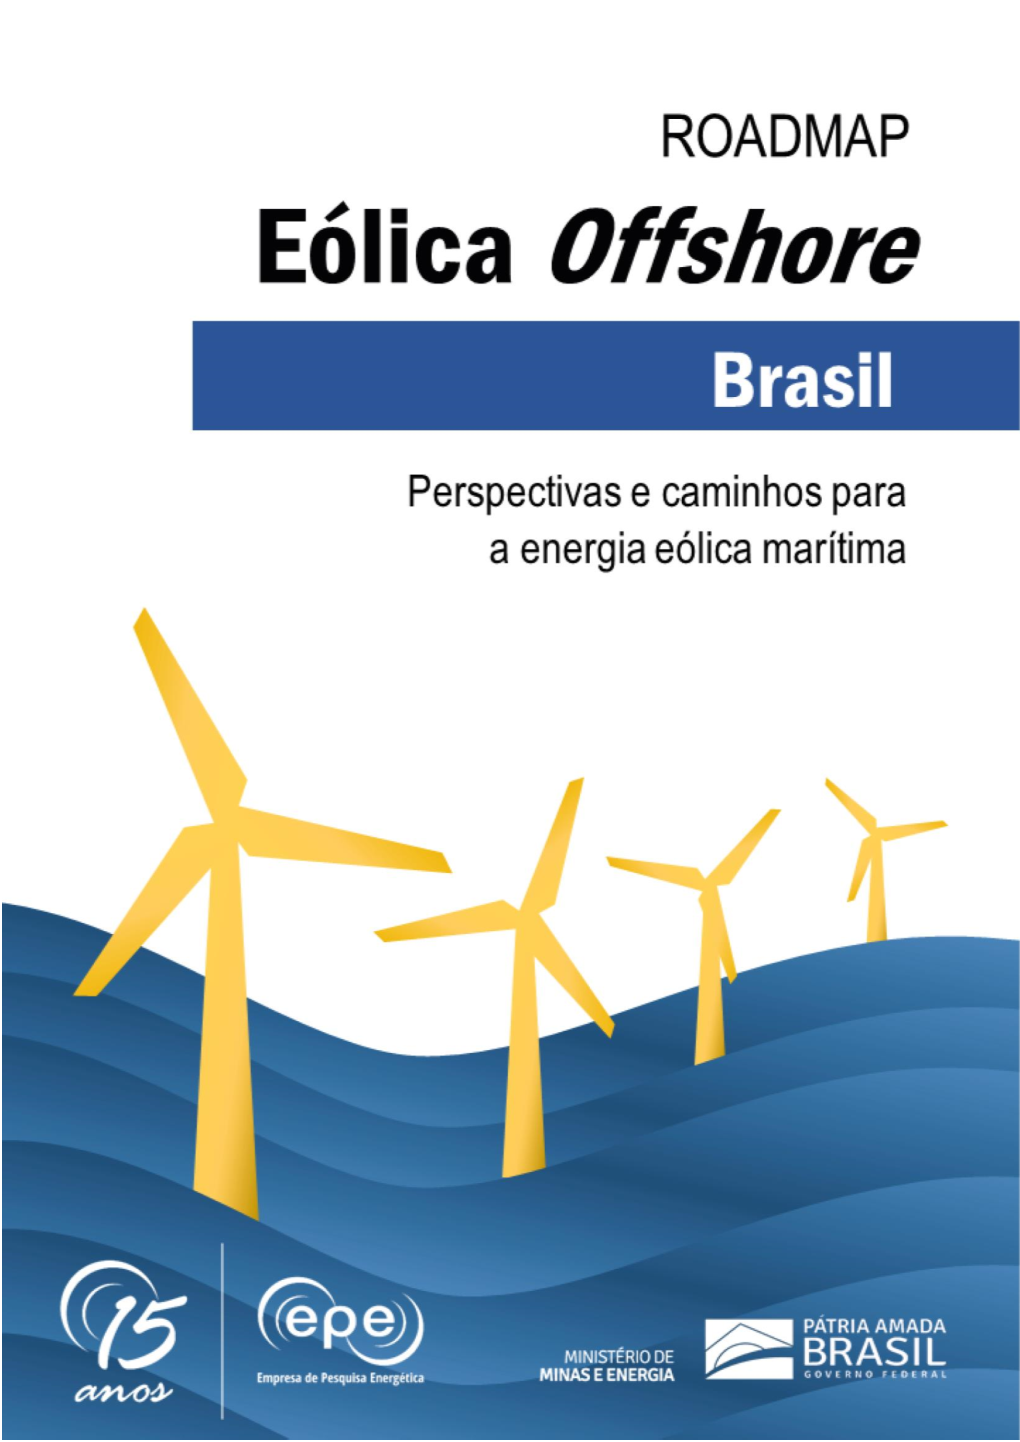 Roadmap Eólica Offshore Brasil